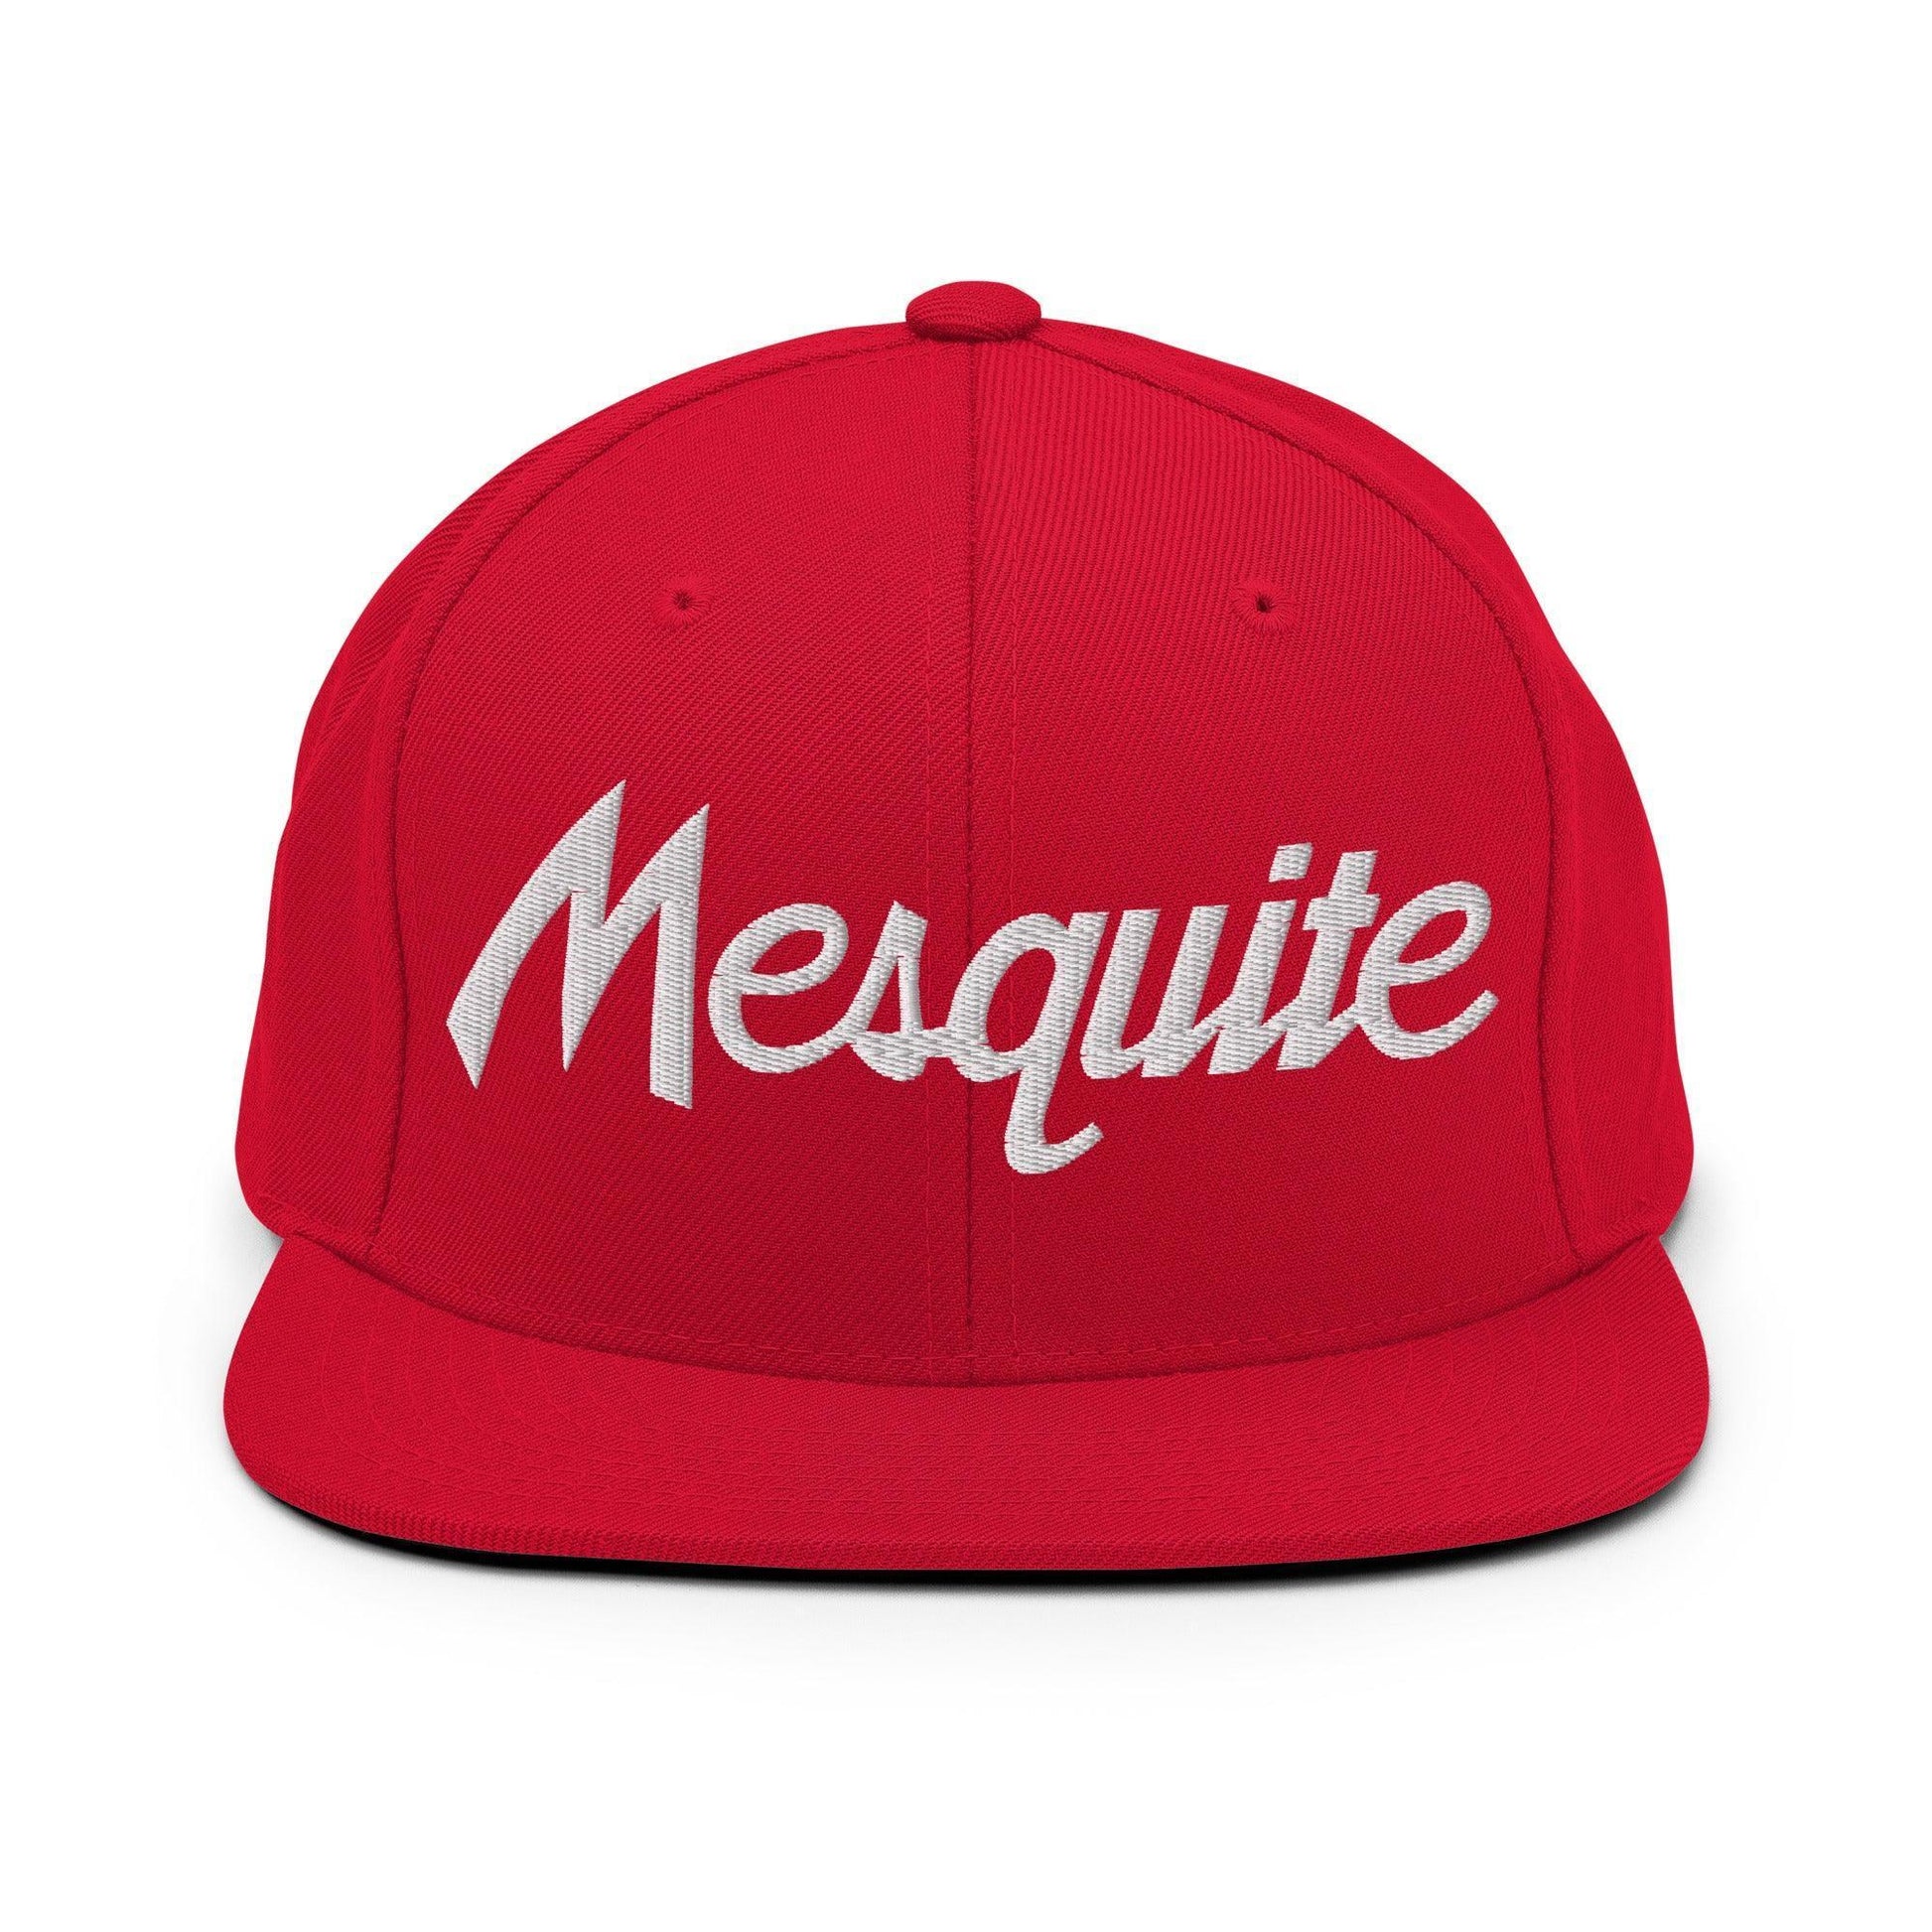 Mesquite Script Snapback Hat Red